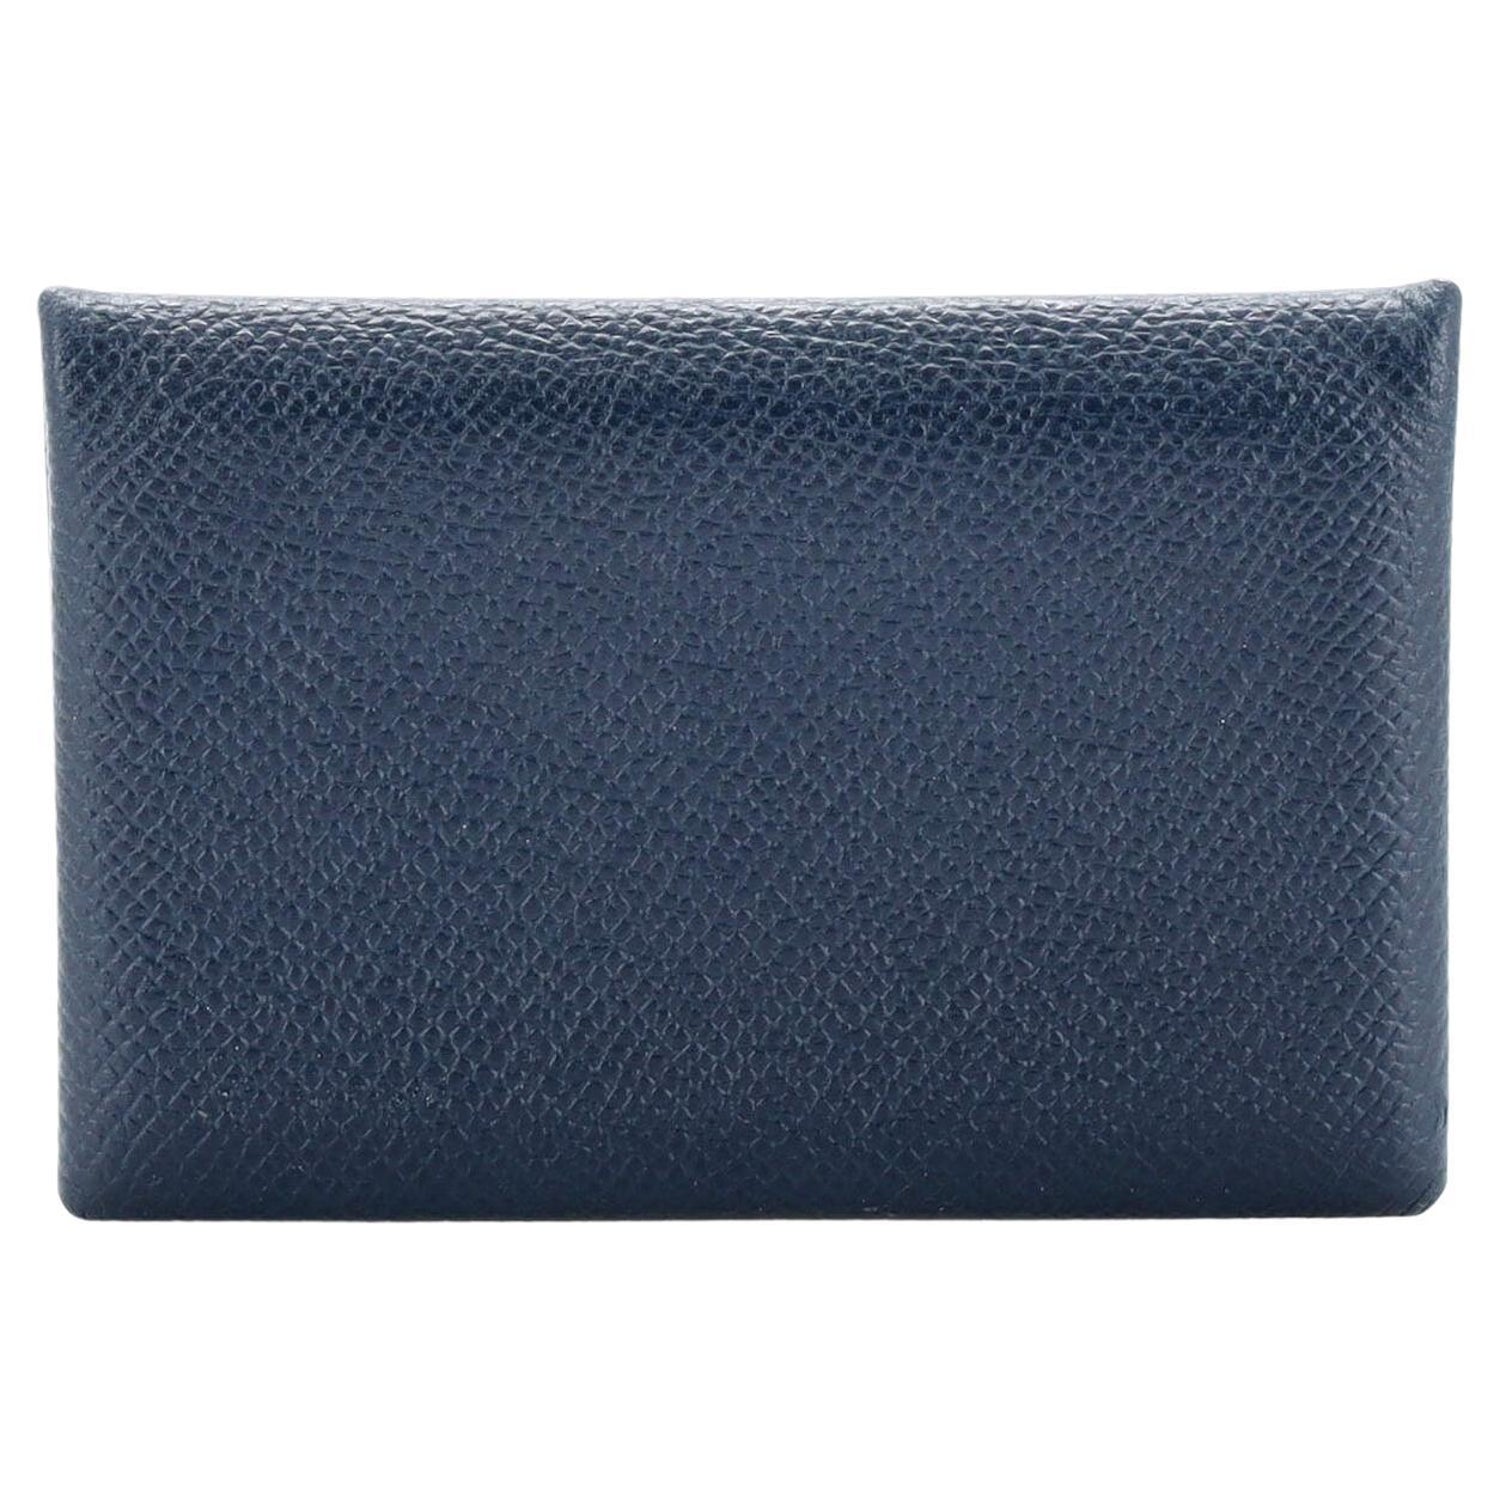 Hermes SLG Calvi Duo Cardholder Wallet, Blue, New in Box WA001